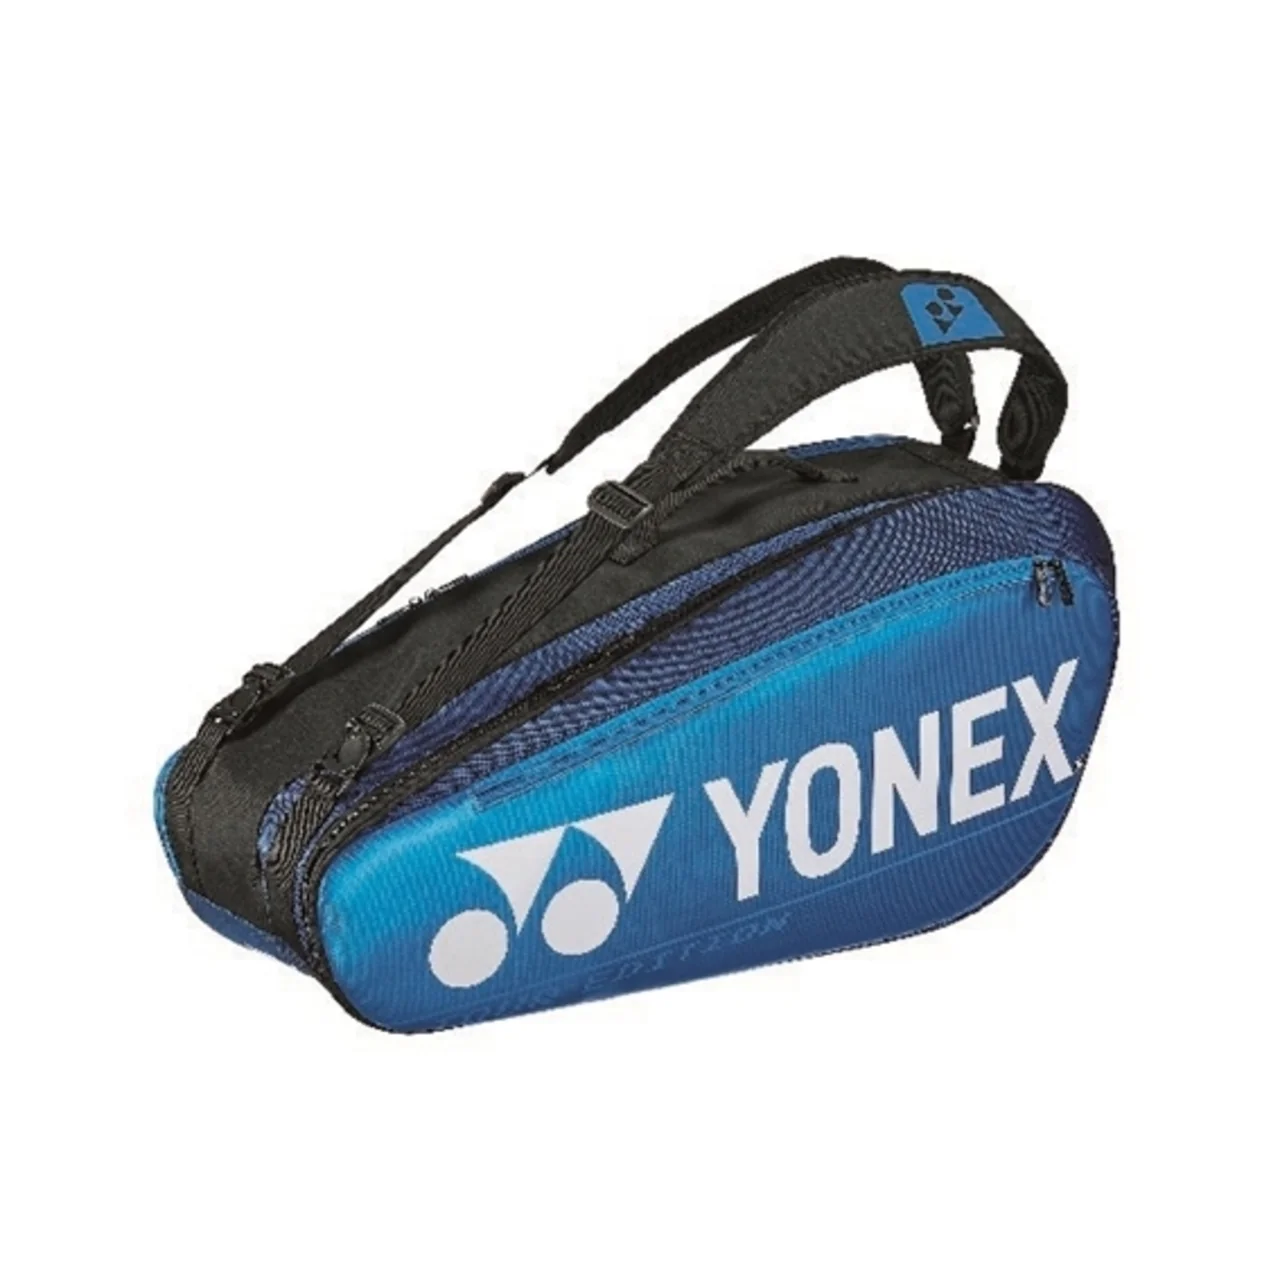 Yonex Pro Bag x6 Deep Blue